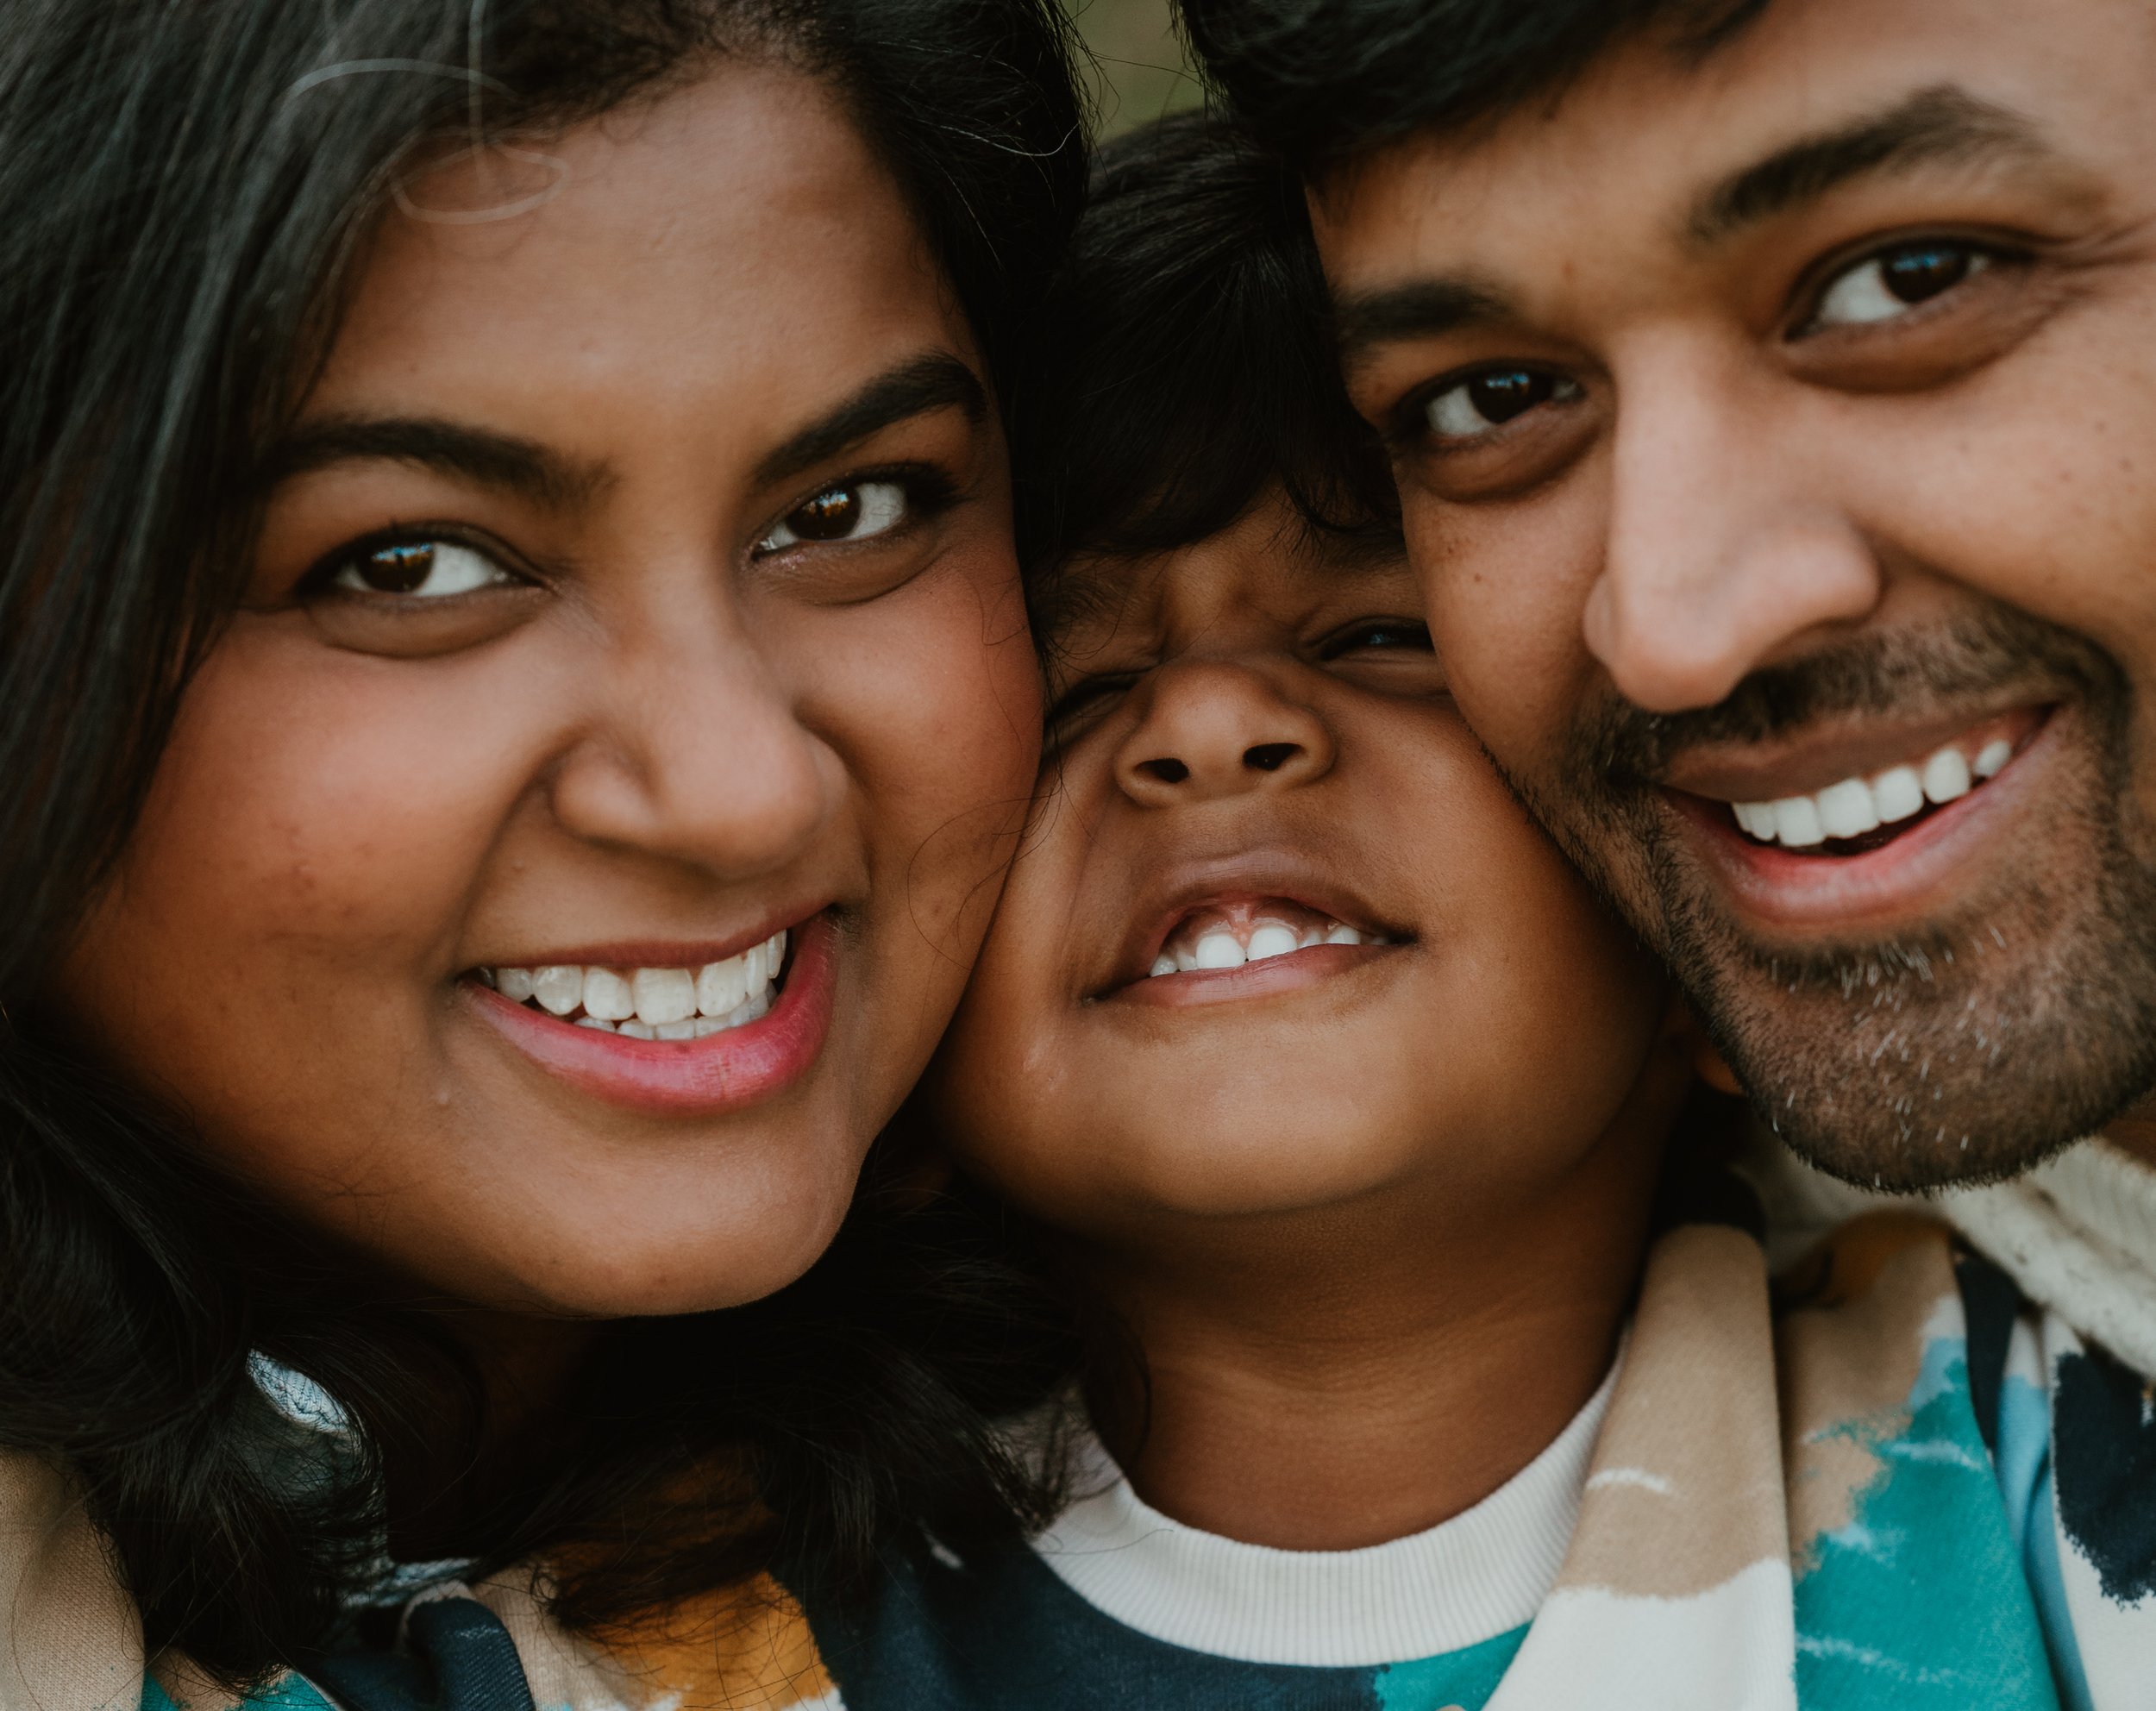 Autism-friendly family photographers